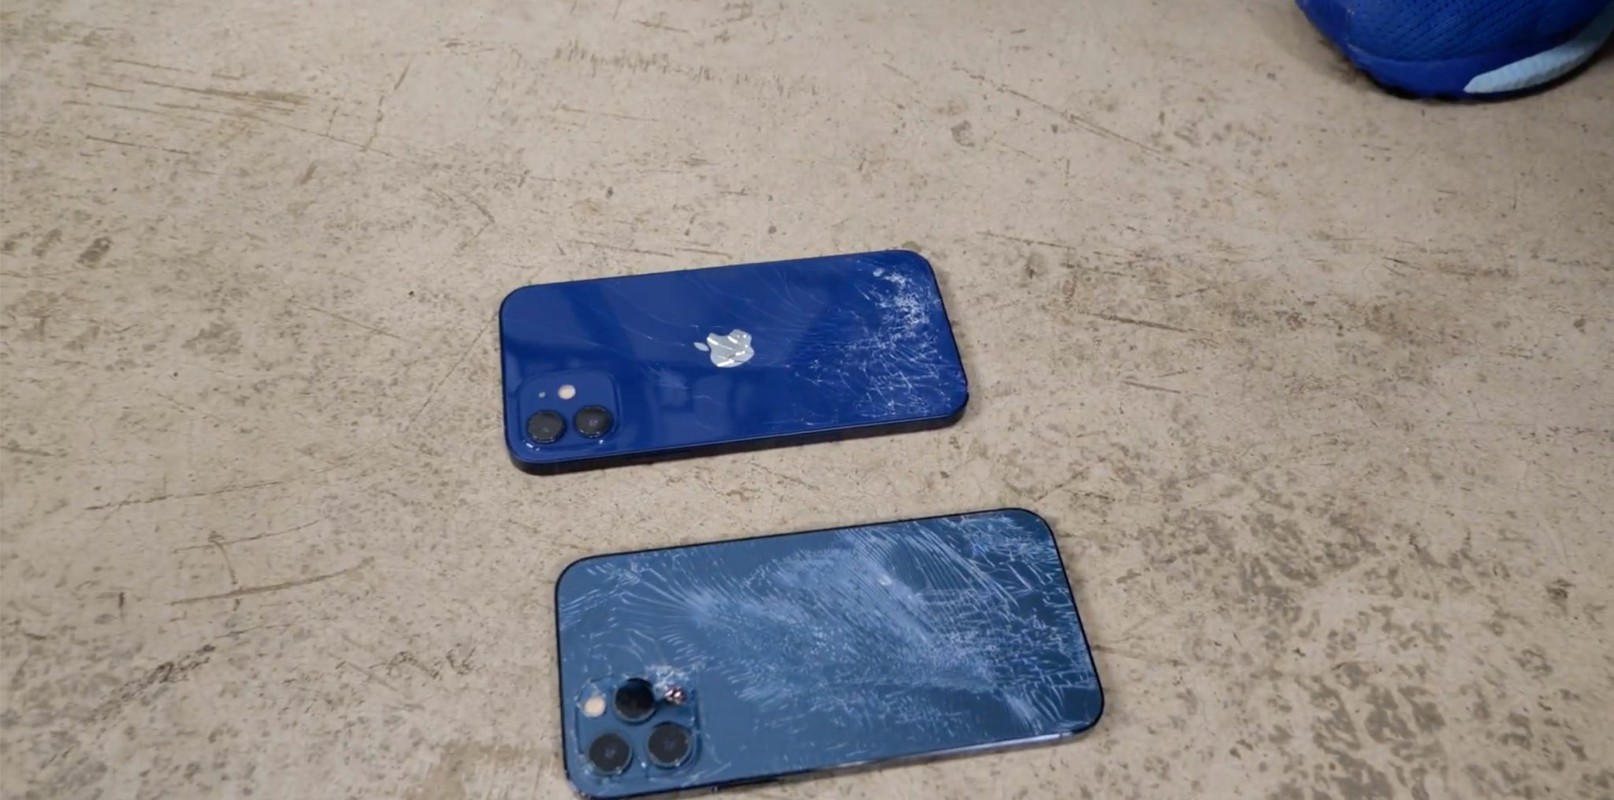 Buot ruot nhin nhung man “tra tan” iPhone 12 khung khiep-Hinh-9